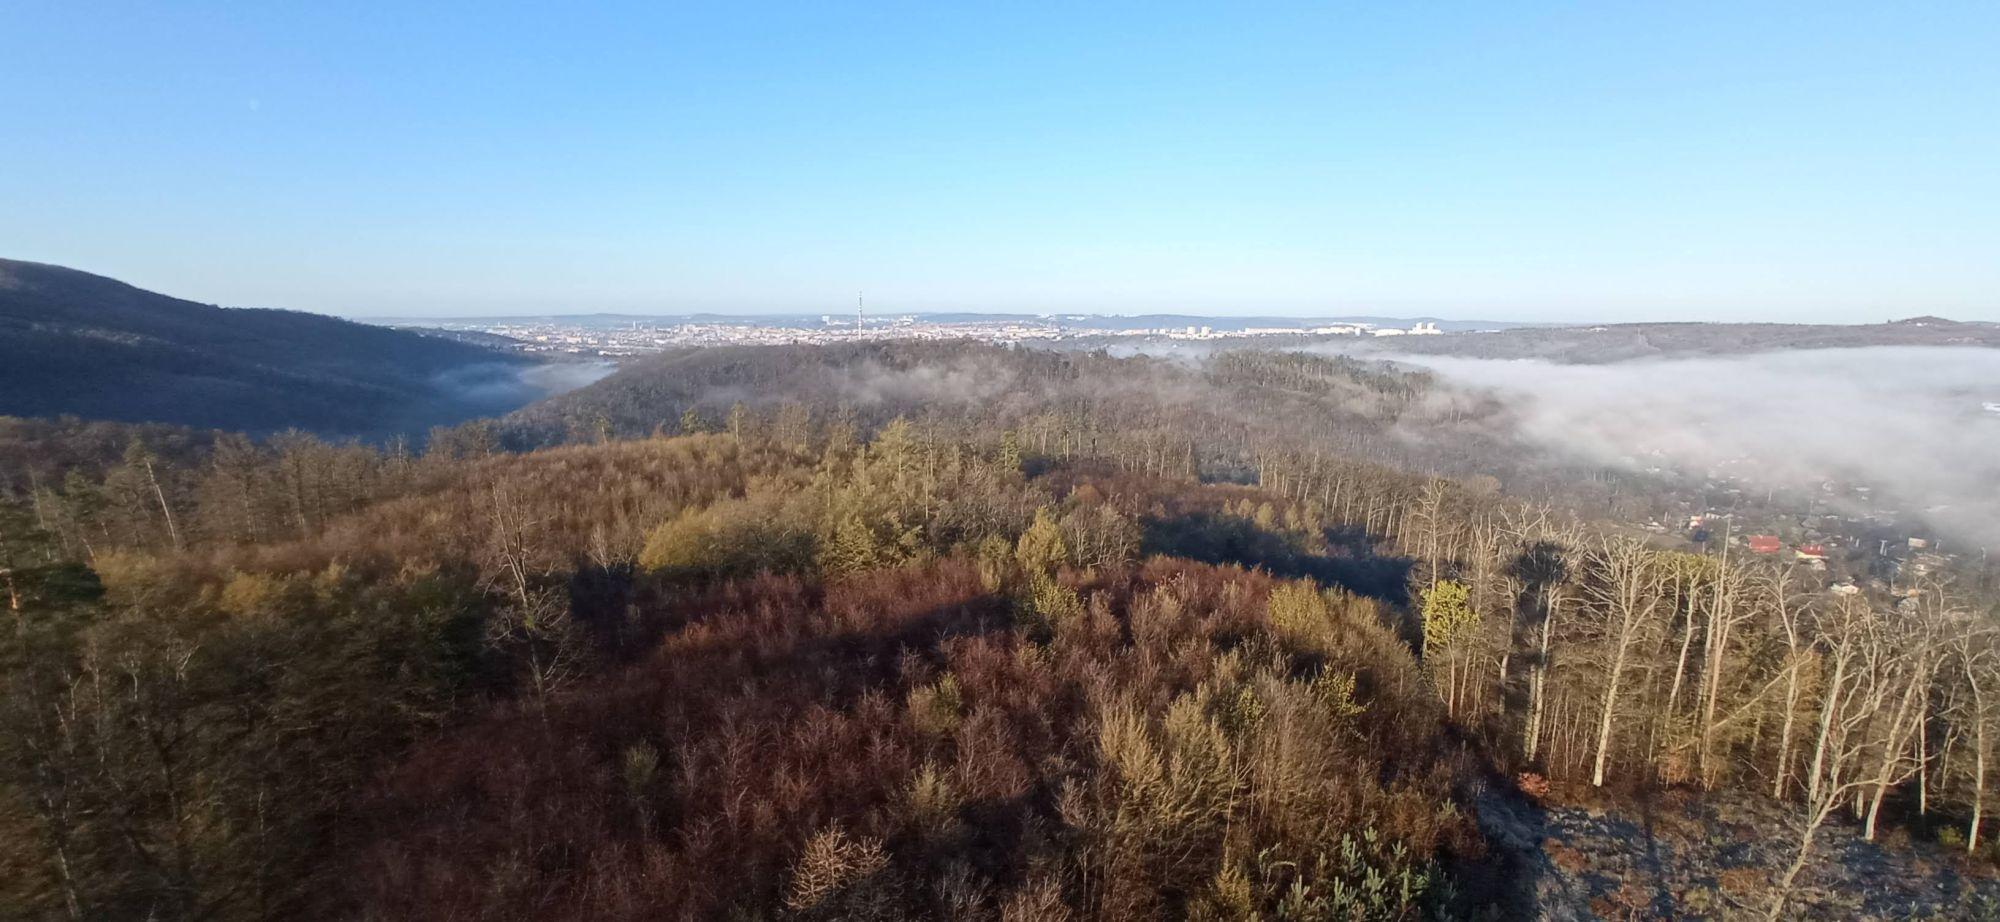 Výhled z rozhledny Liduška na Brno a na mlhu v údolí, autor Martin Šerák